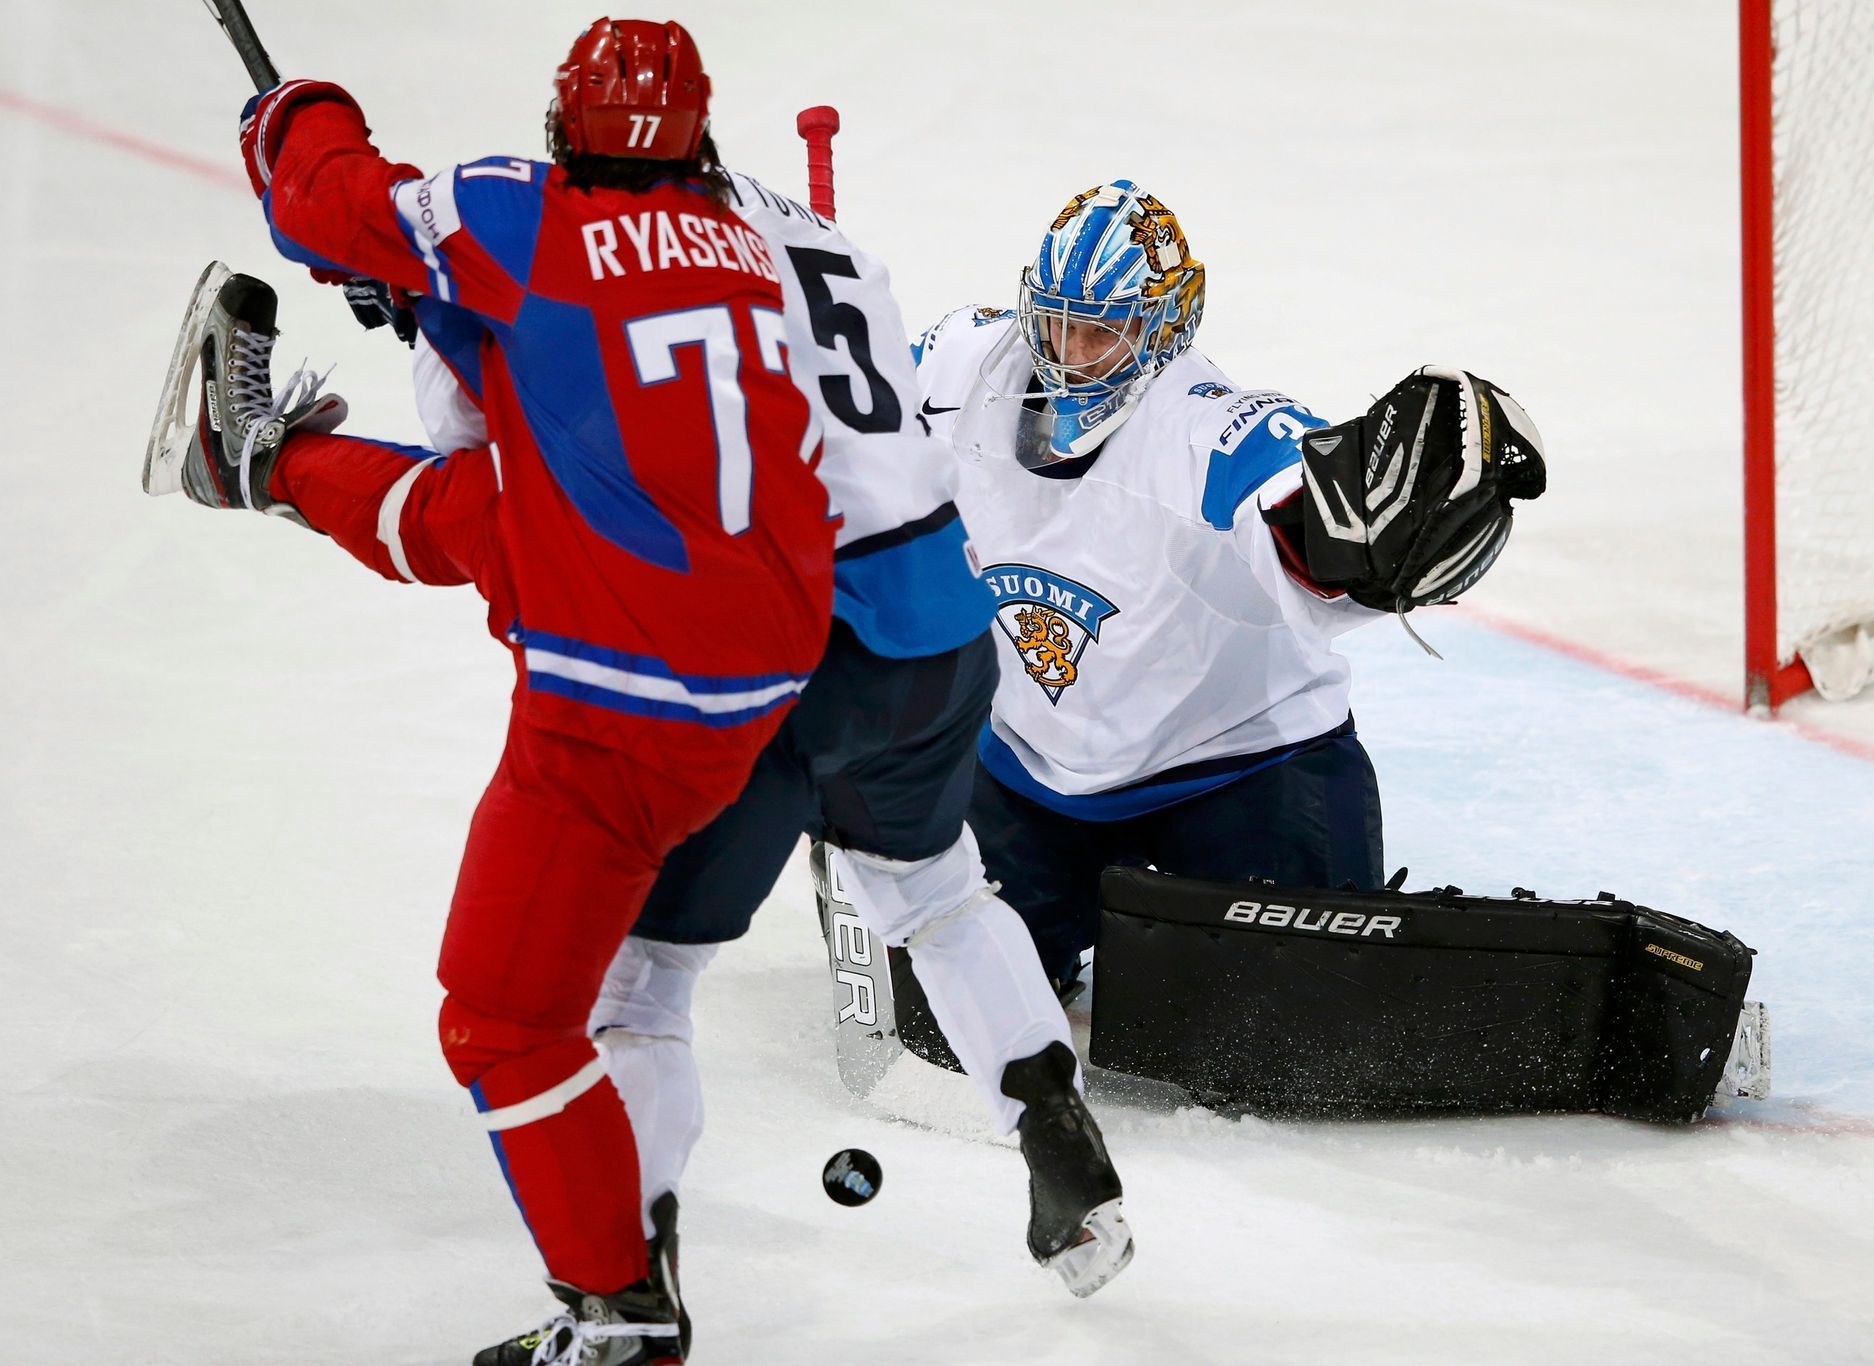 Hokej, MS 2013, Rusko - Finsko: Jevgenij Rjasenskij - Juha-Pekka Hytönen a Antti Raanta